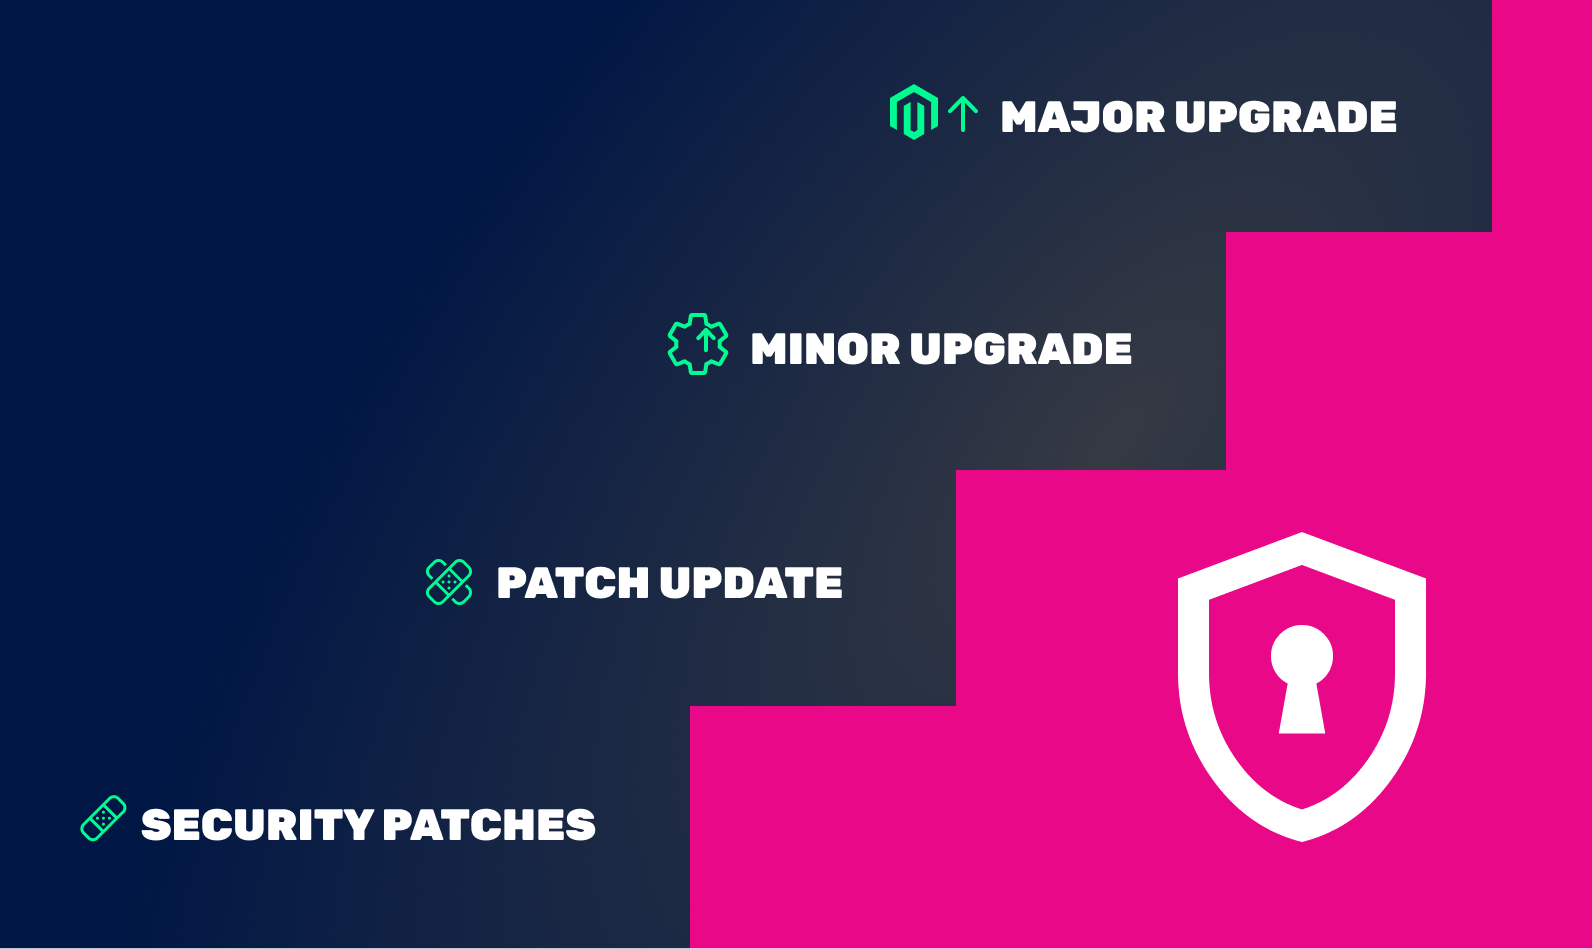 Verschillende magento 2 upgrades
security patches, patch update, minor upgrade, major upgrade